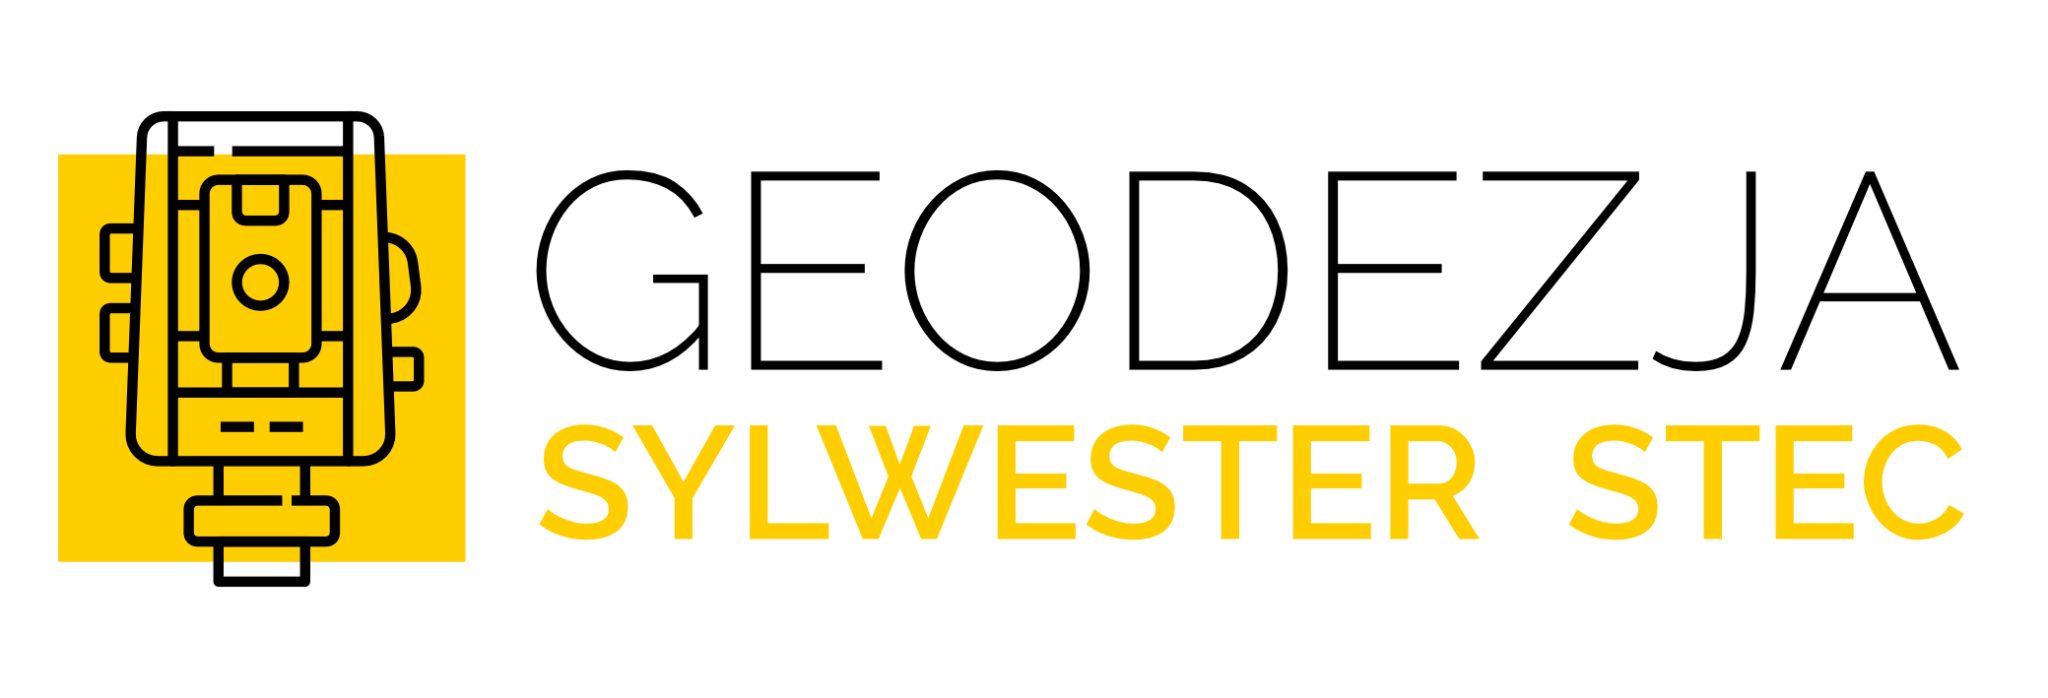 Geodezja Stec logo